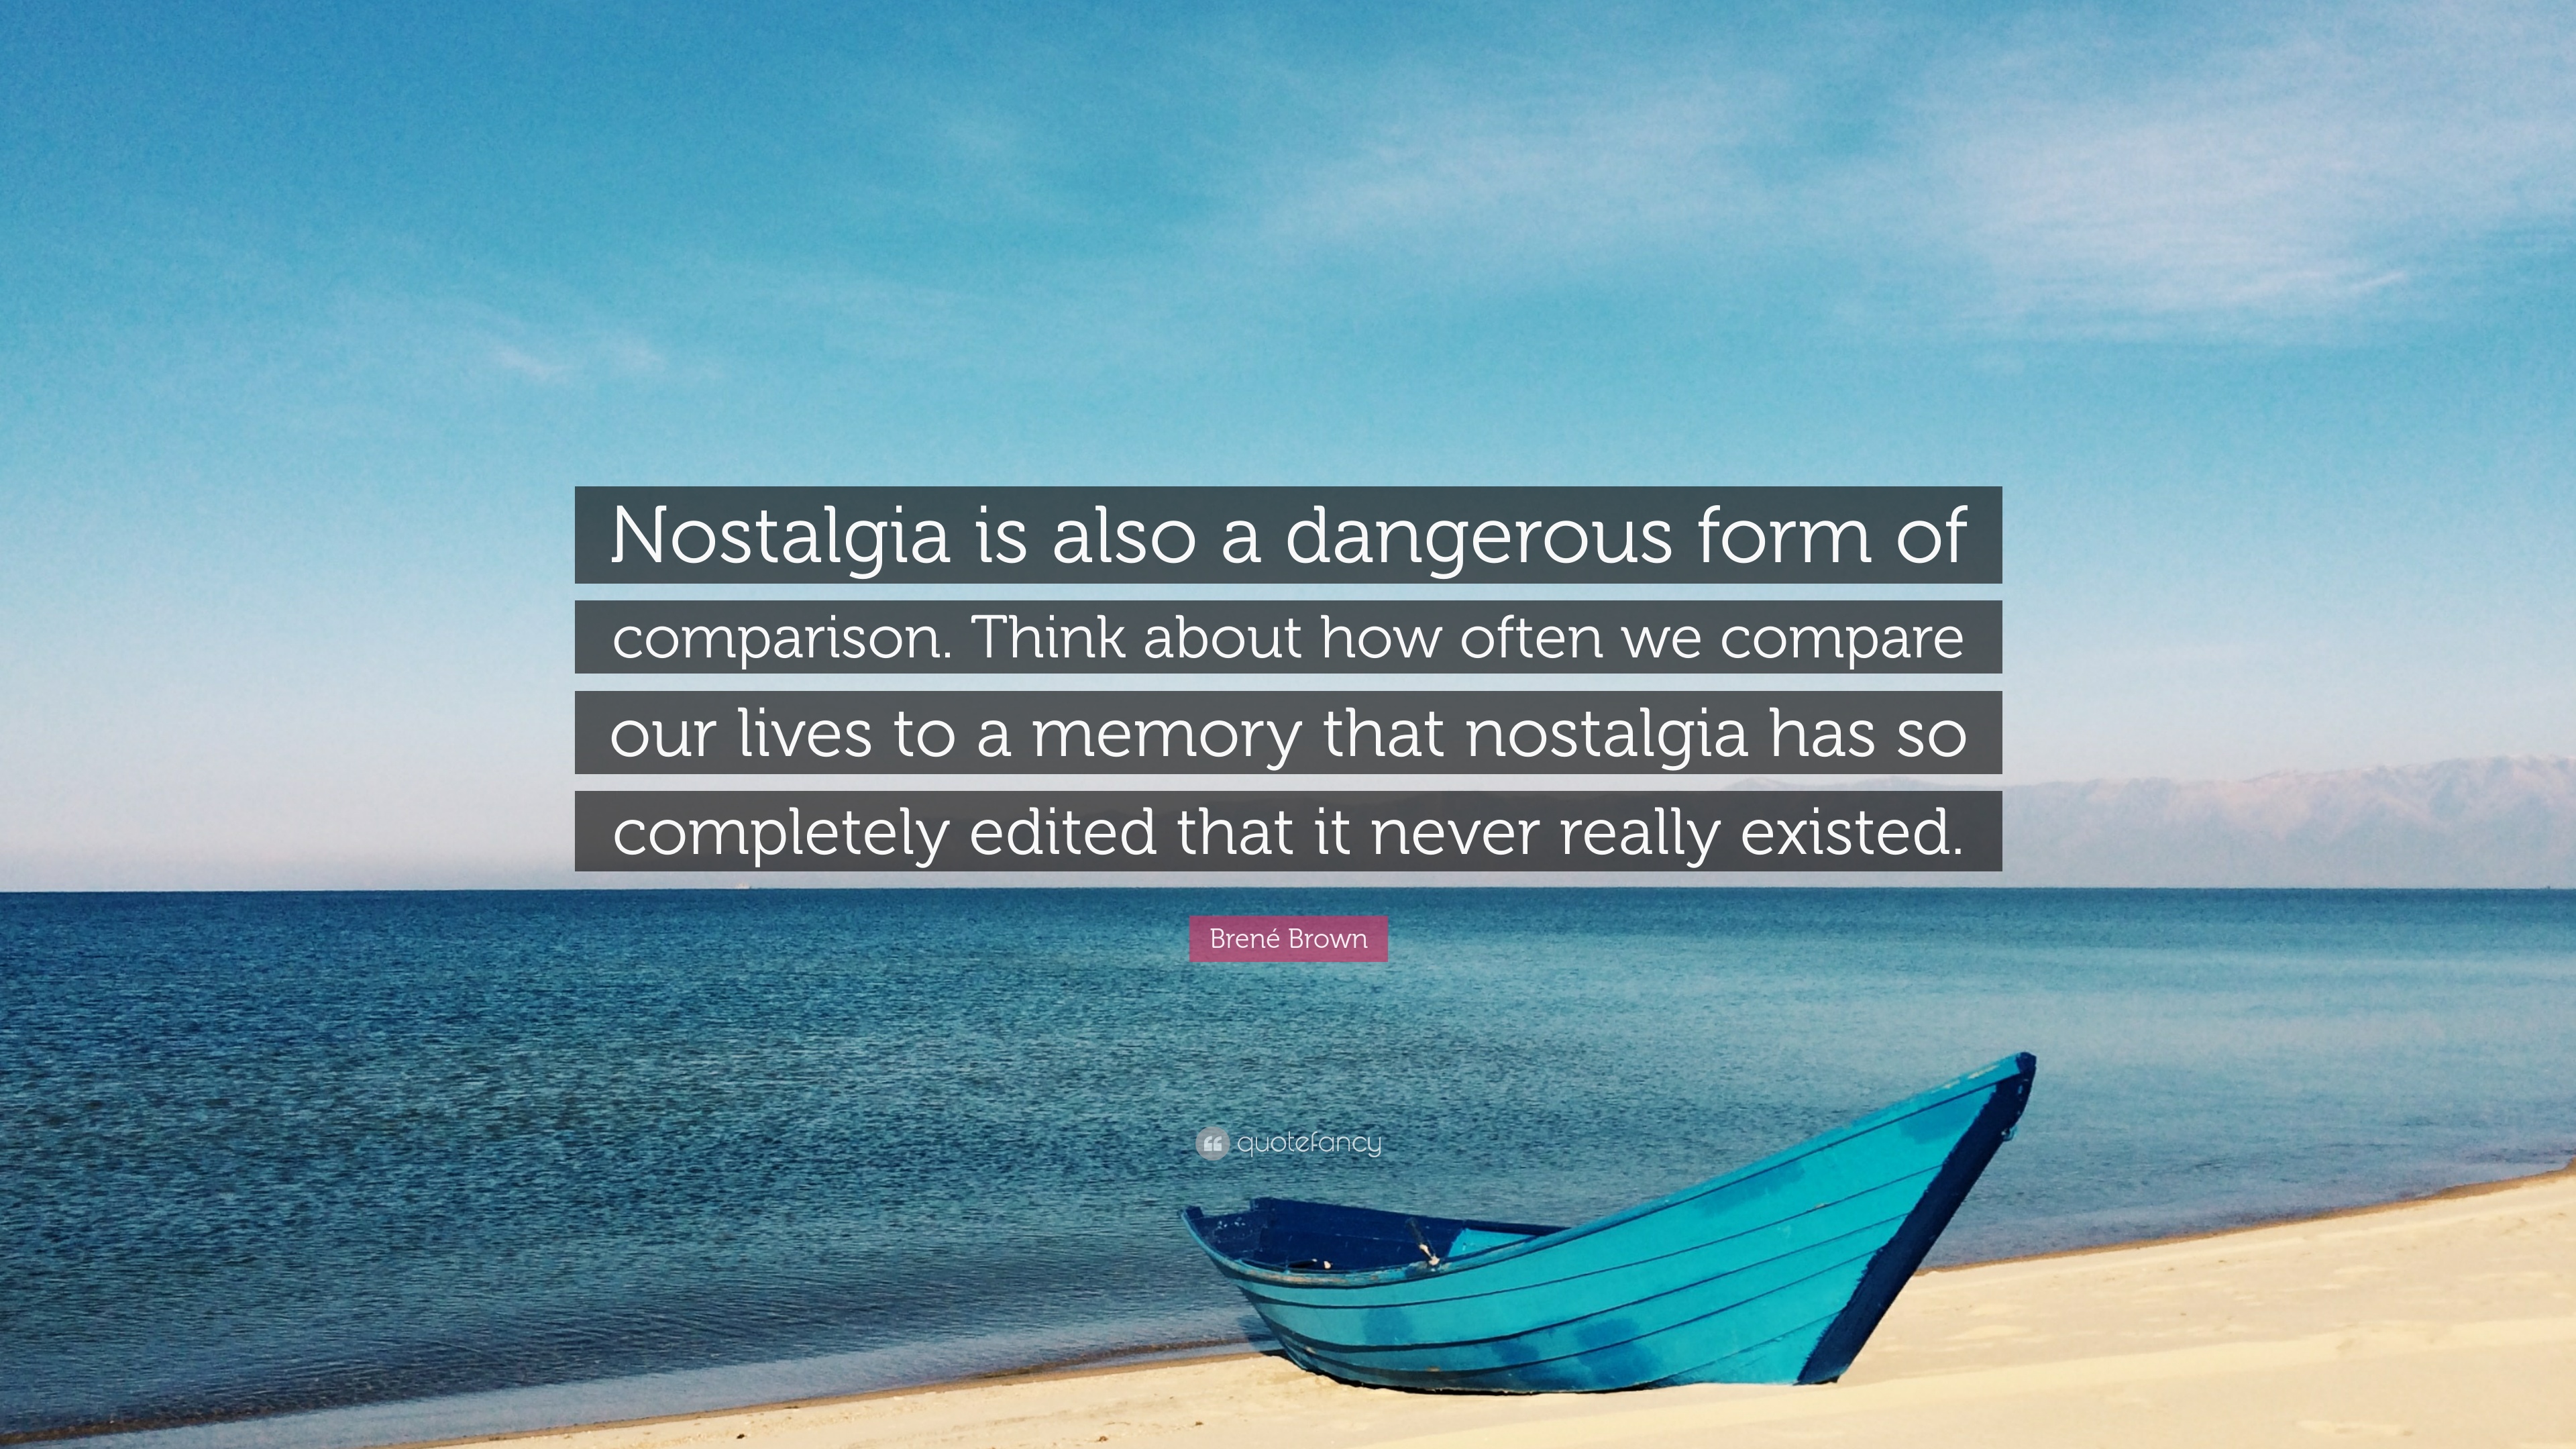 Brené Brown Quote: “Nostalgia is also a dangerous form of comparison ...